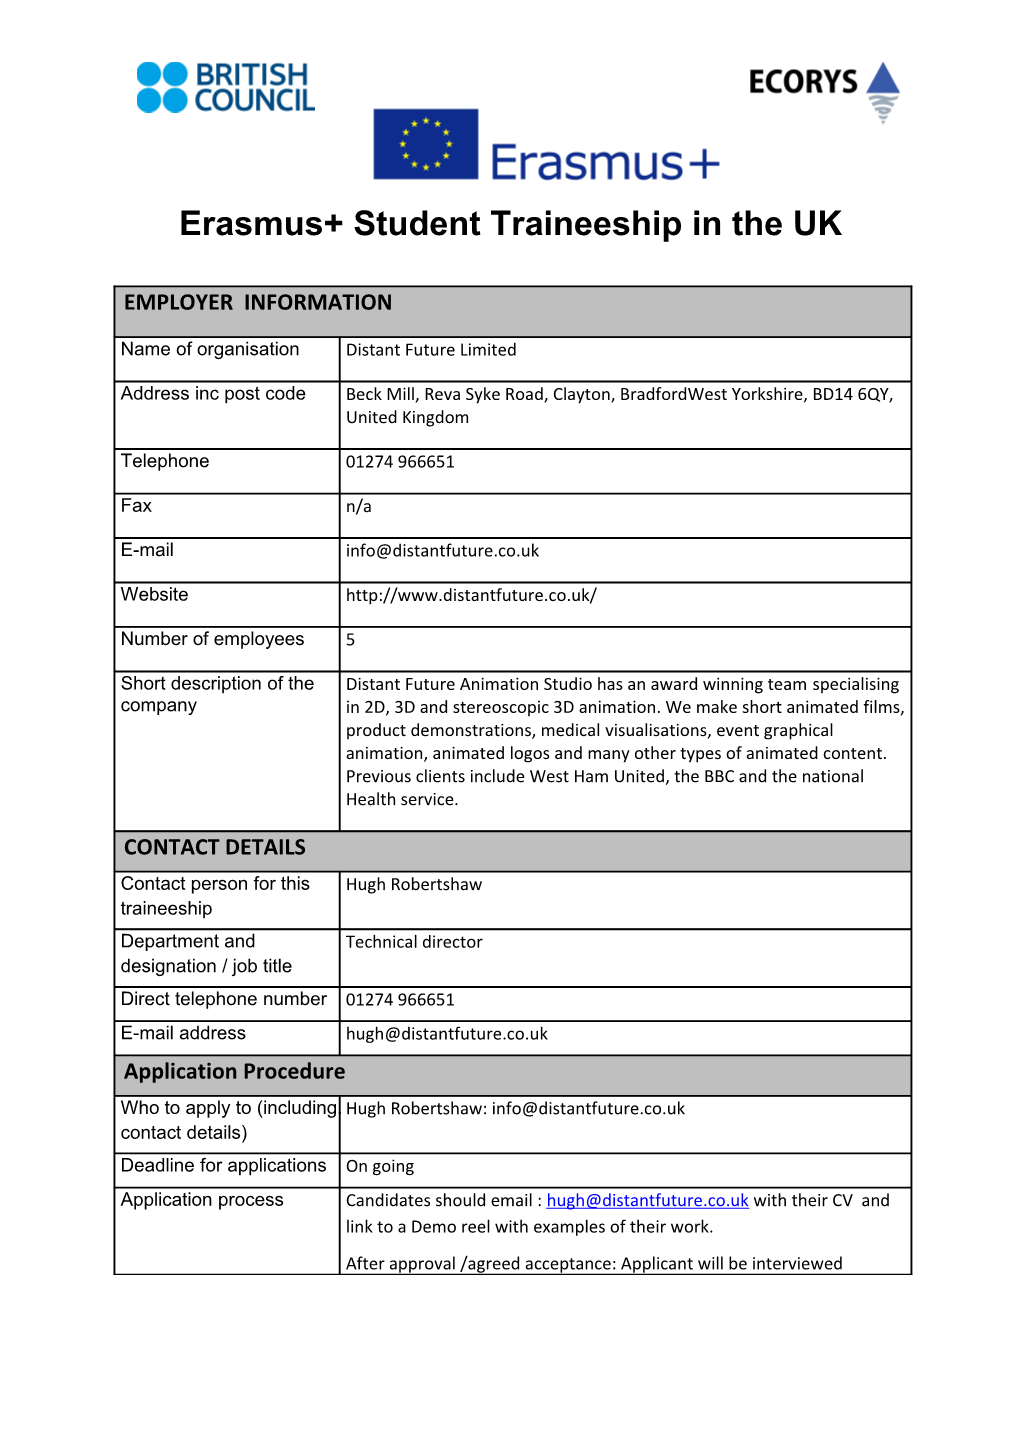 Erasmus+ Student Traineeship in the UK